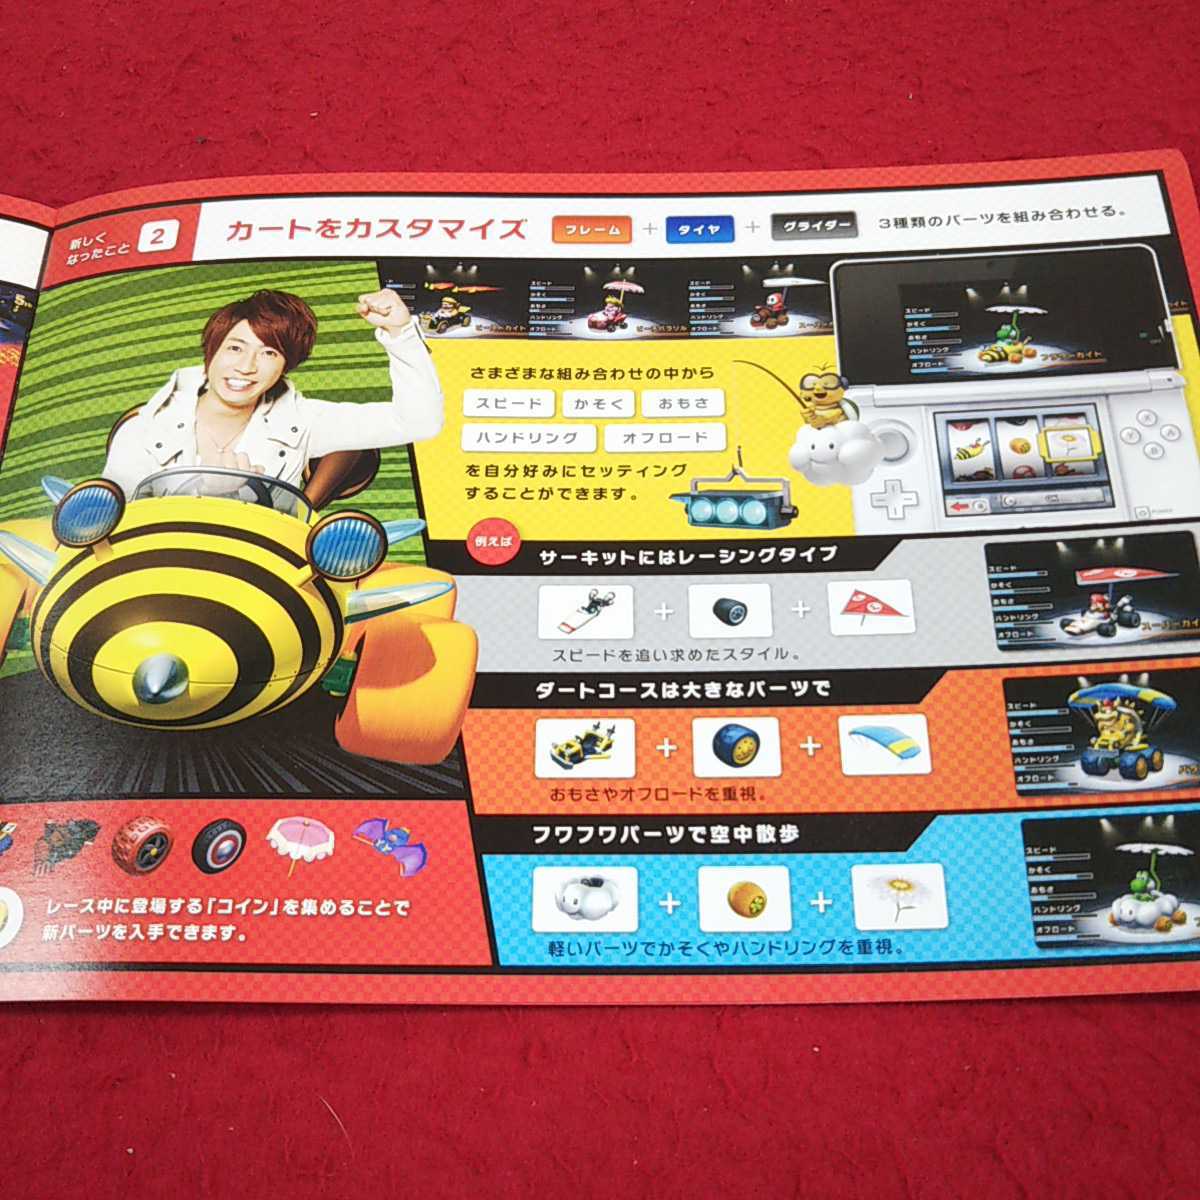 e-467※13 NINTENDO 3DSパンフレット マリオカート7 ARASHI 任天堂_画像4